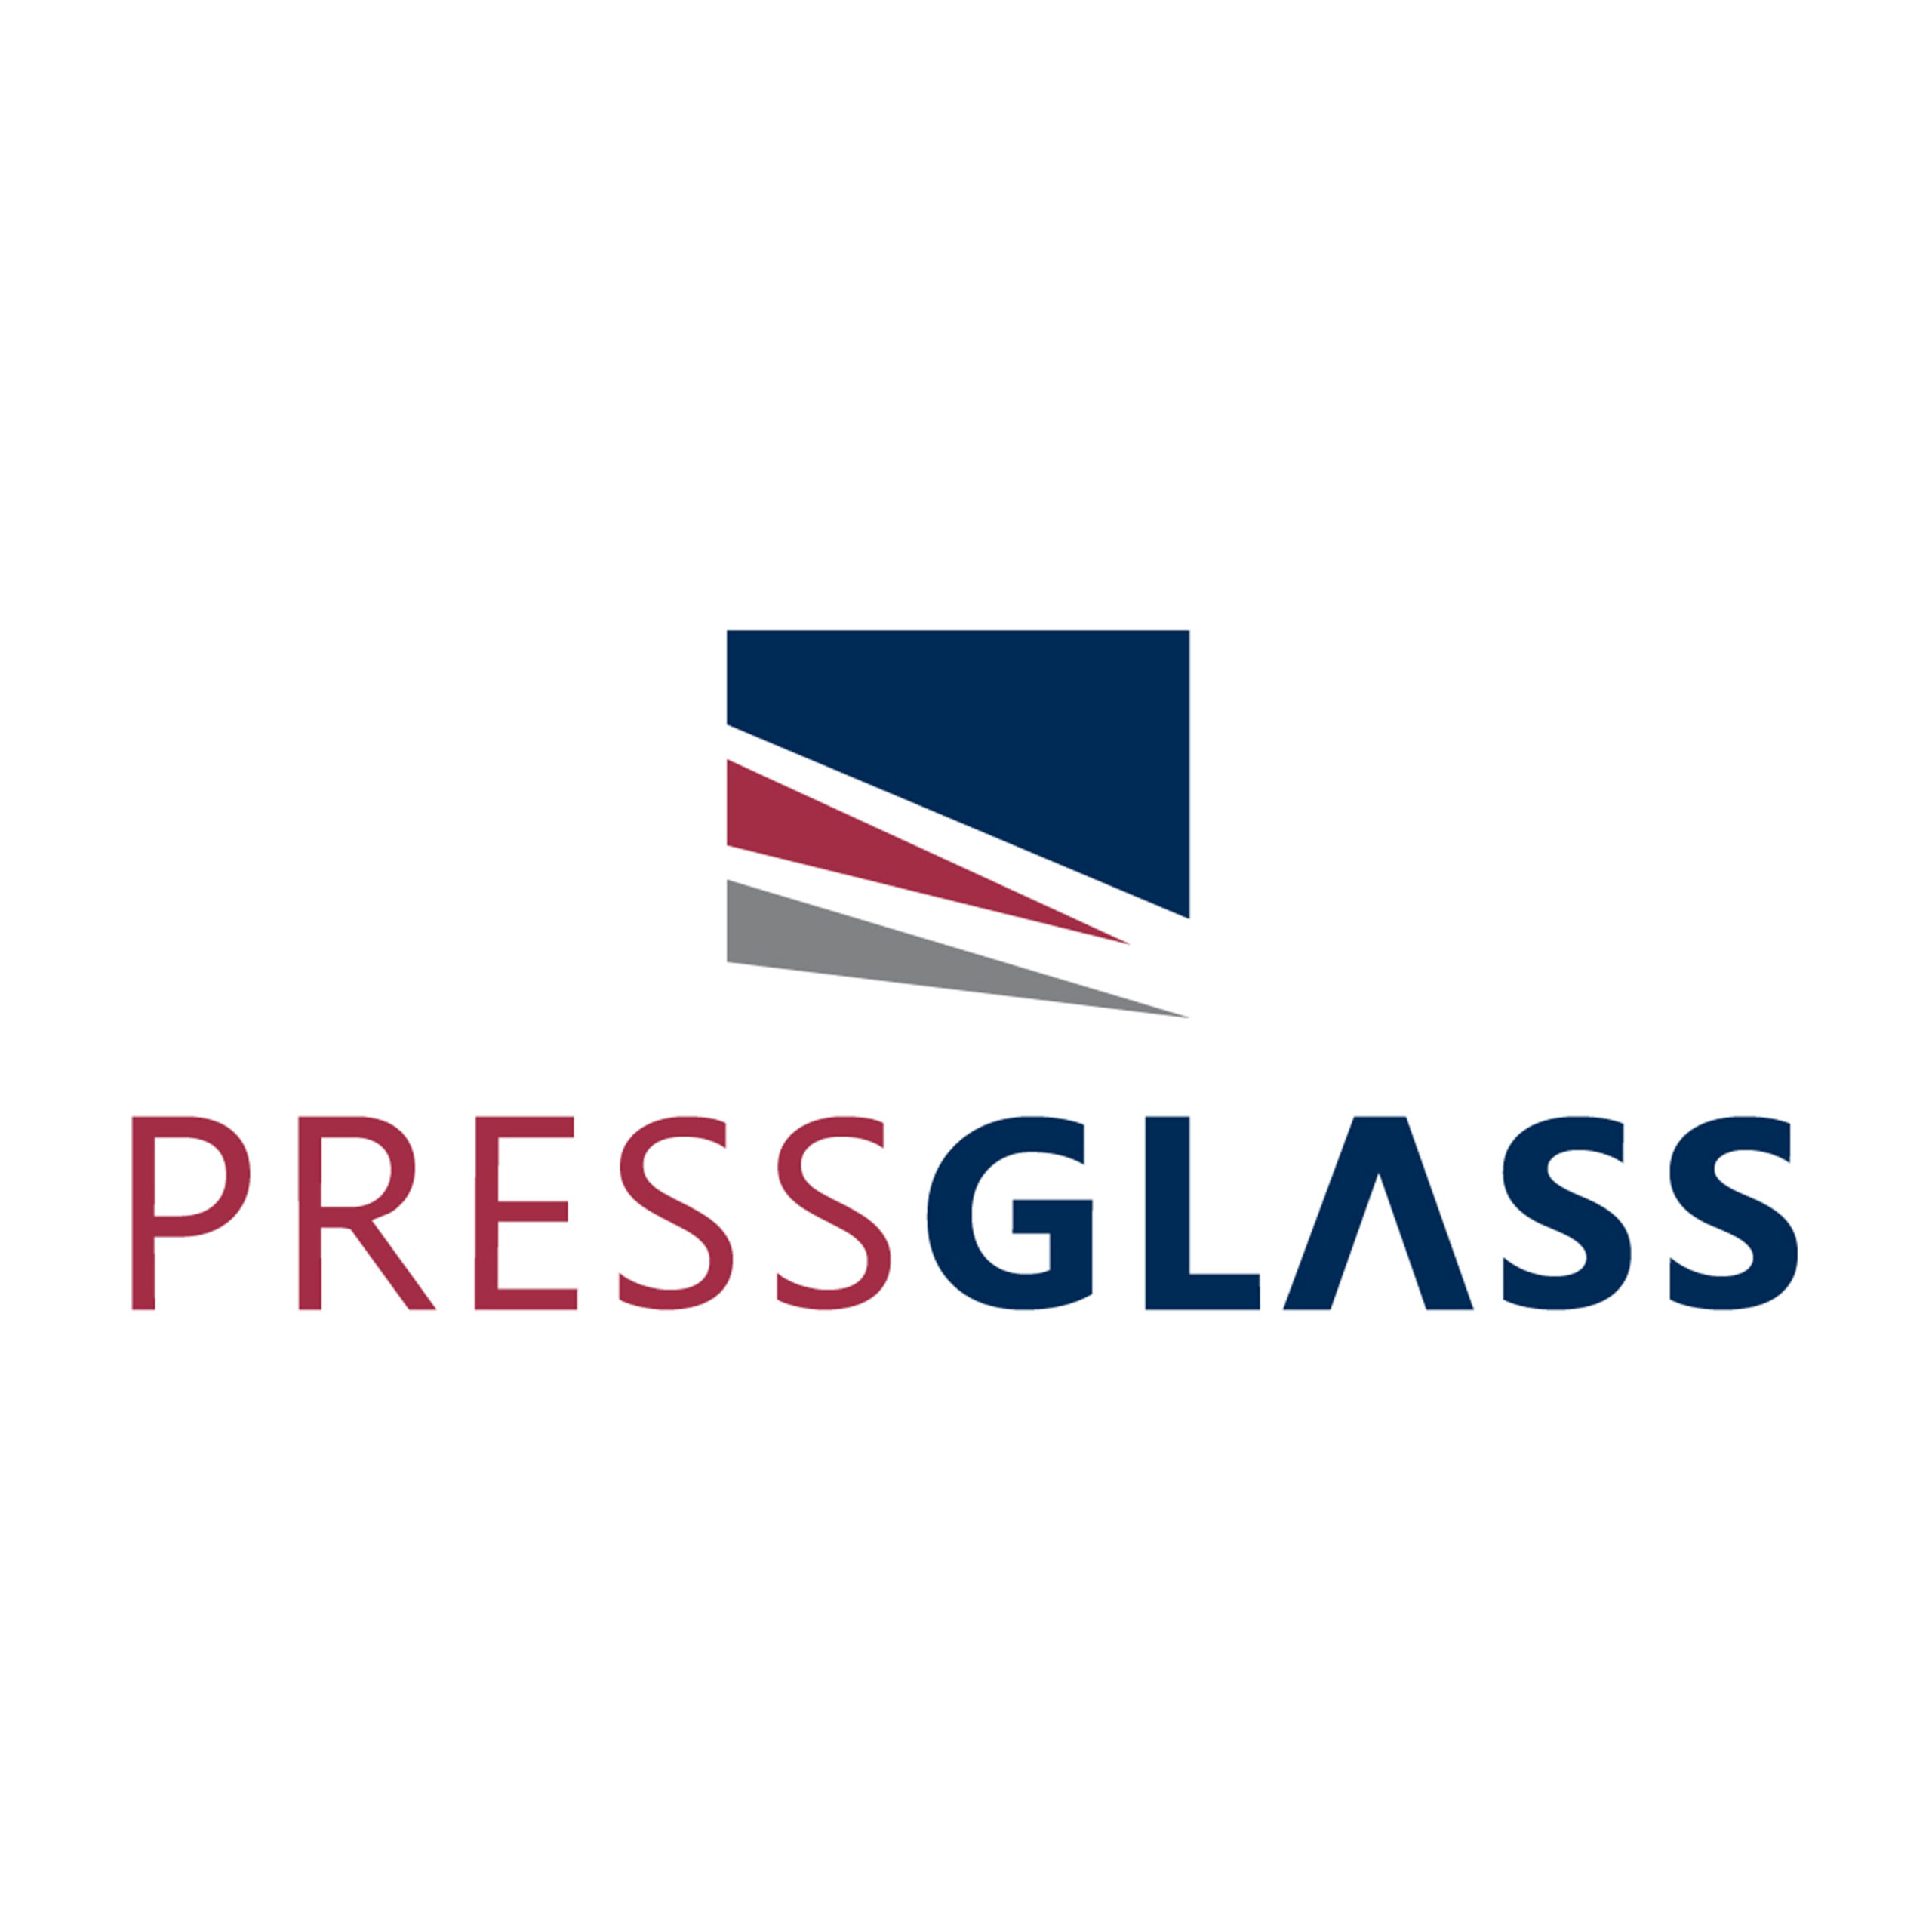 press glass polecane